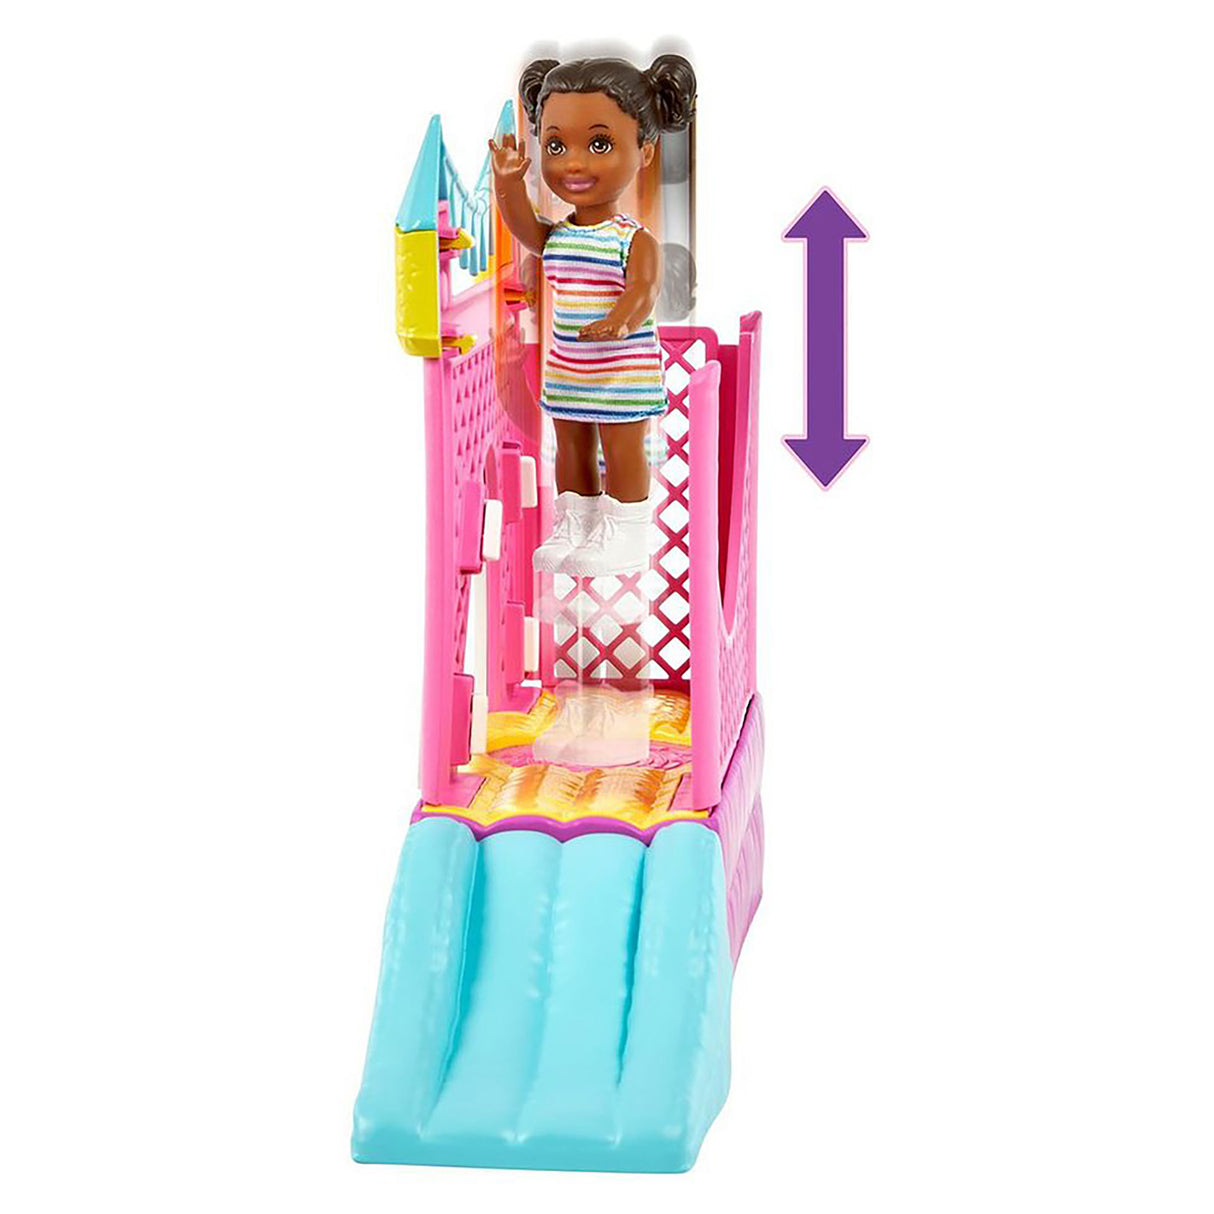 Barbie Skipper Babysitters Inc Dolls and Accessories